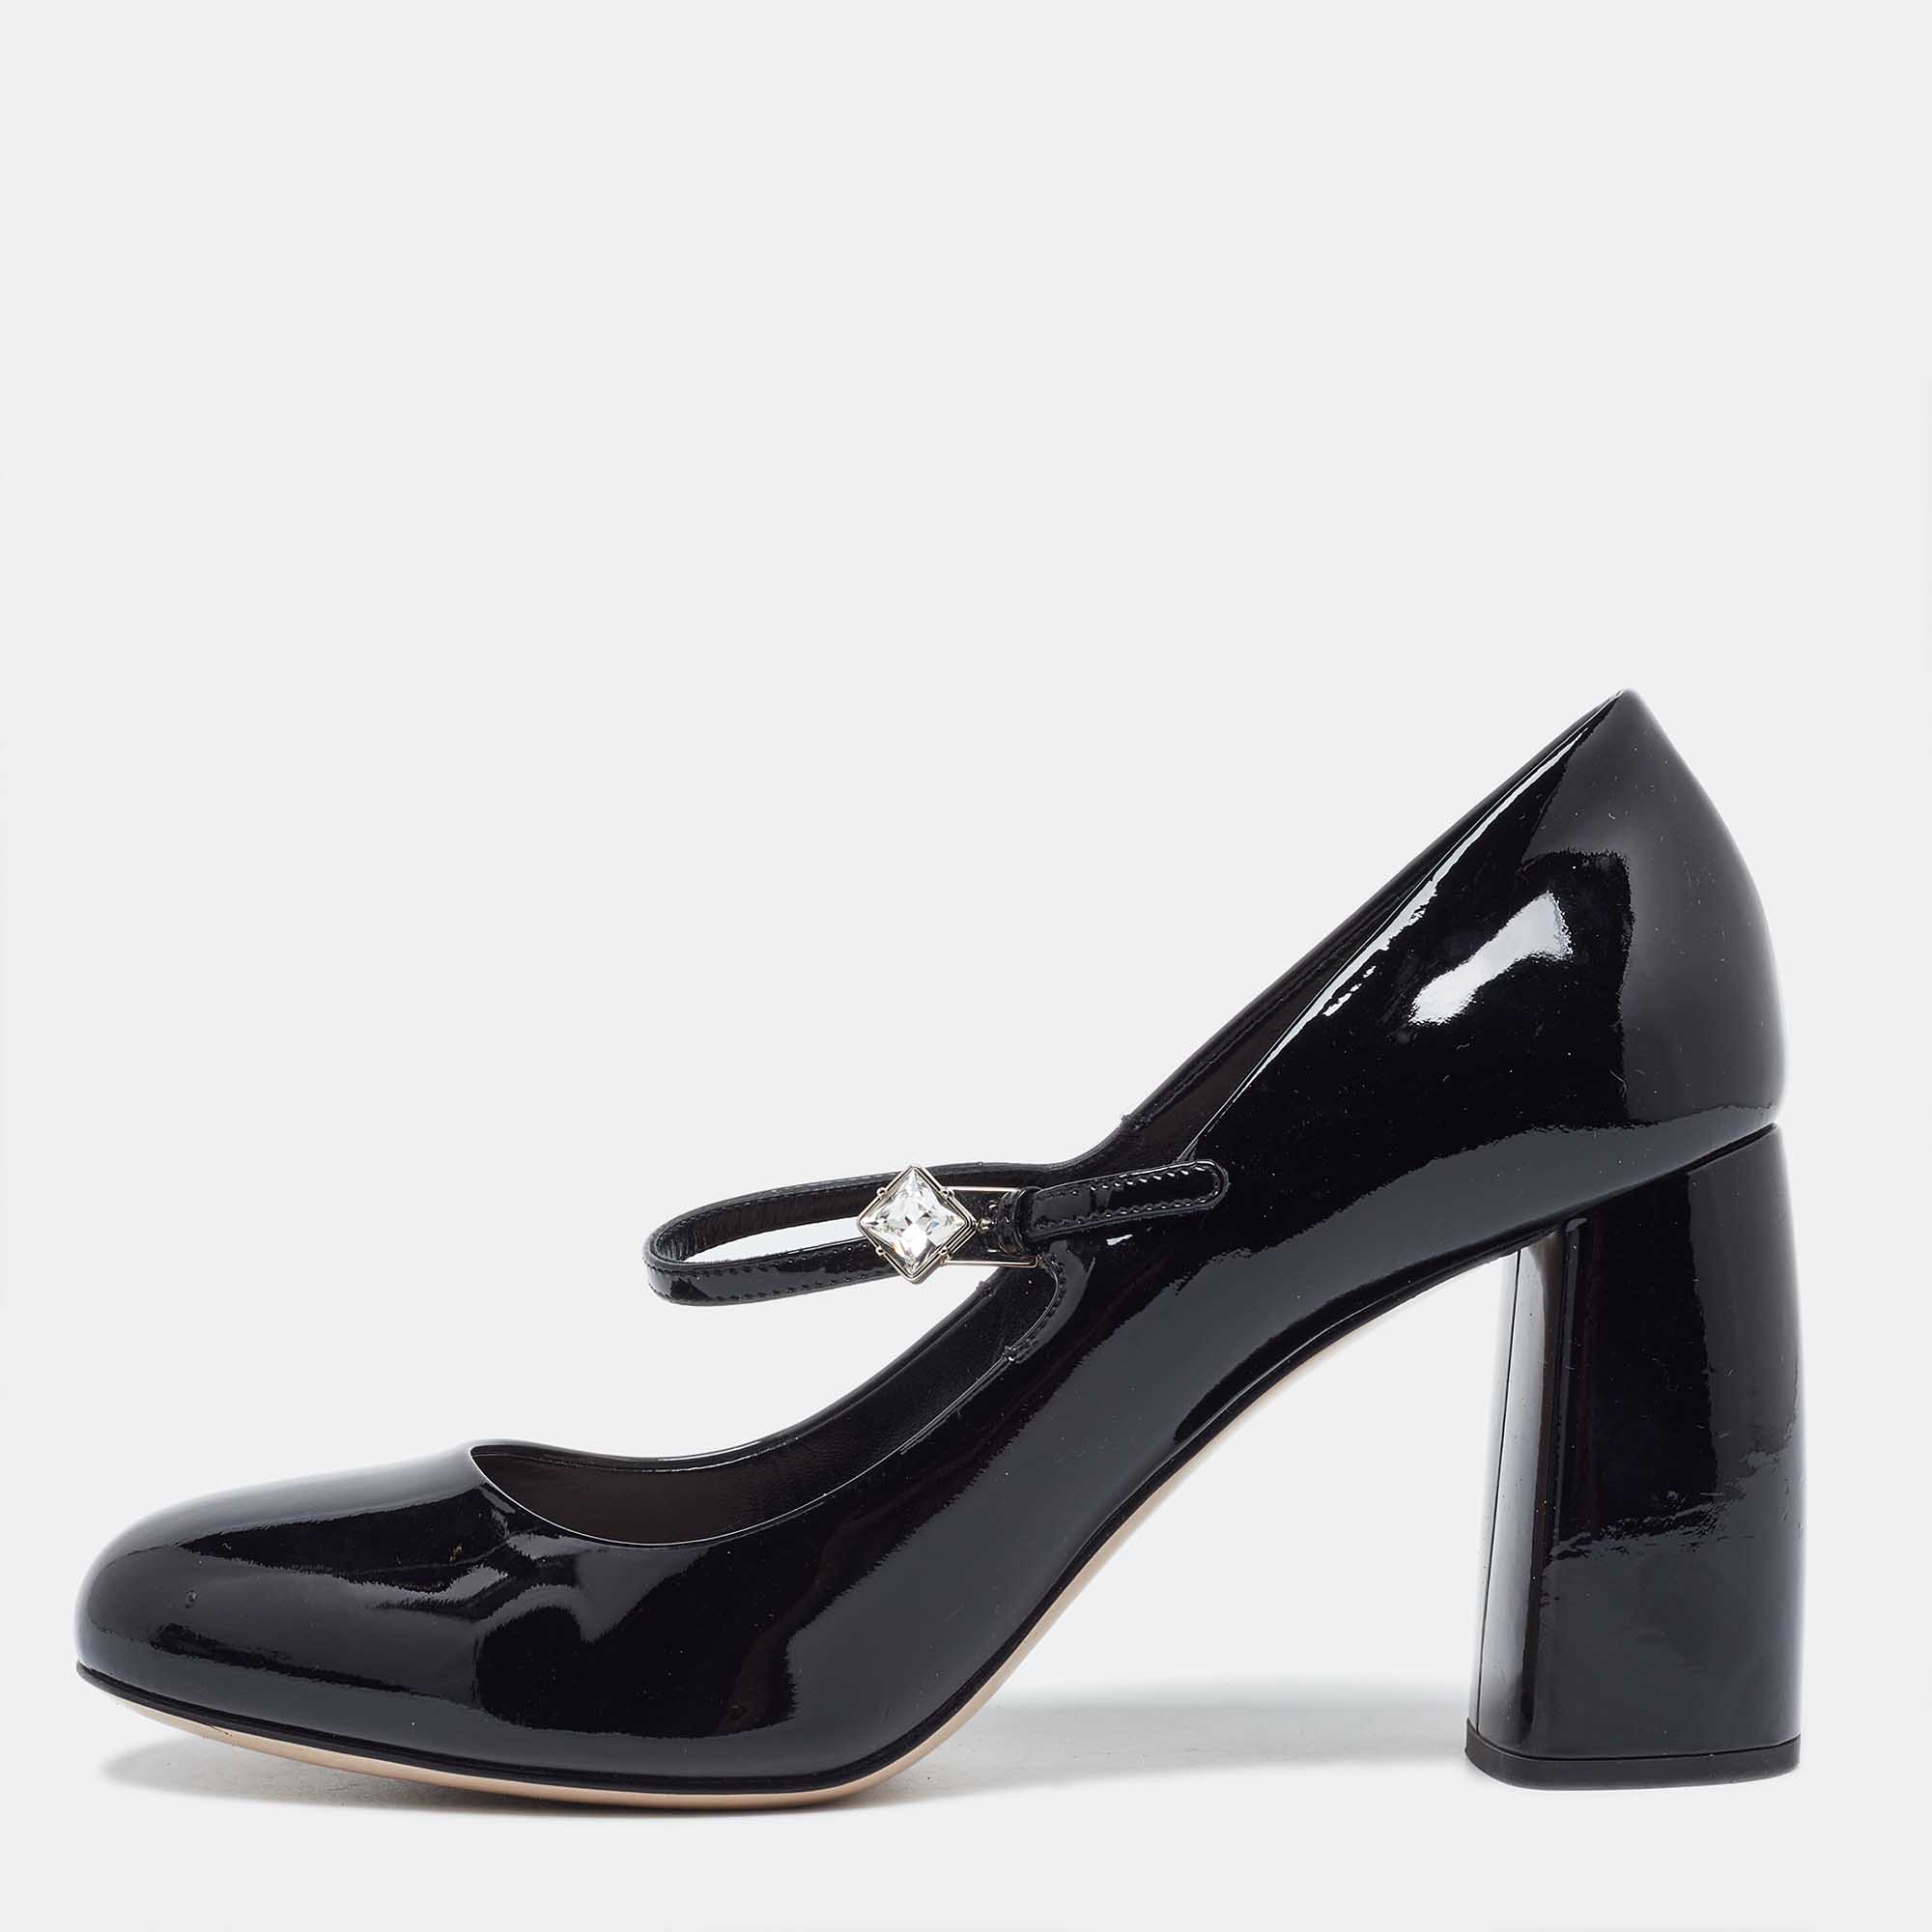 Miu miu black patent leather mary jane block heel pumps size 39